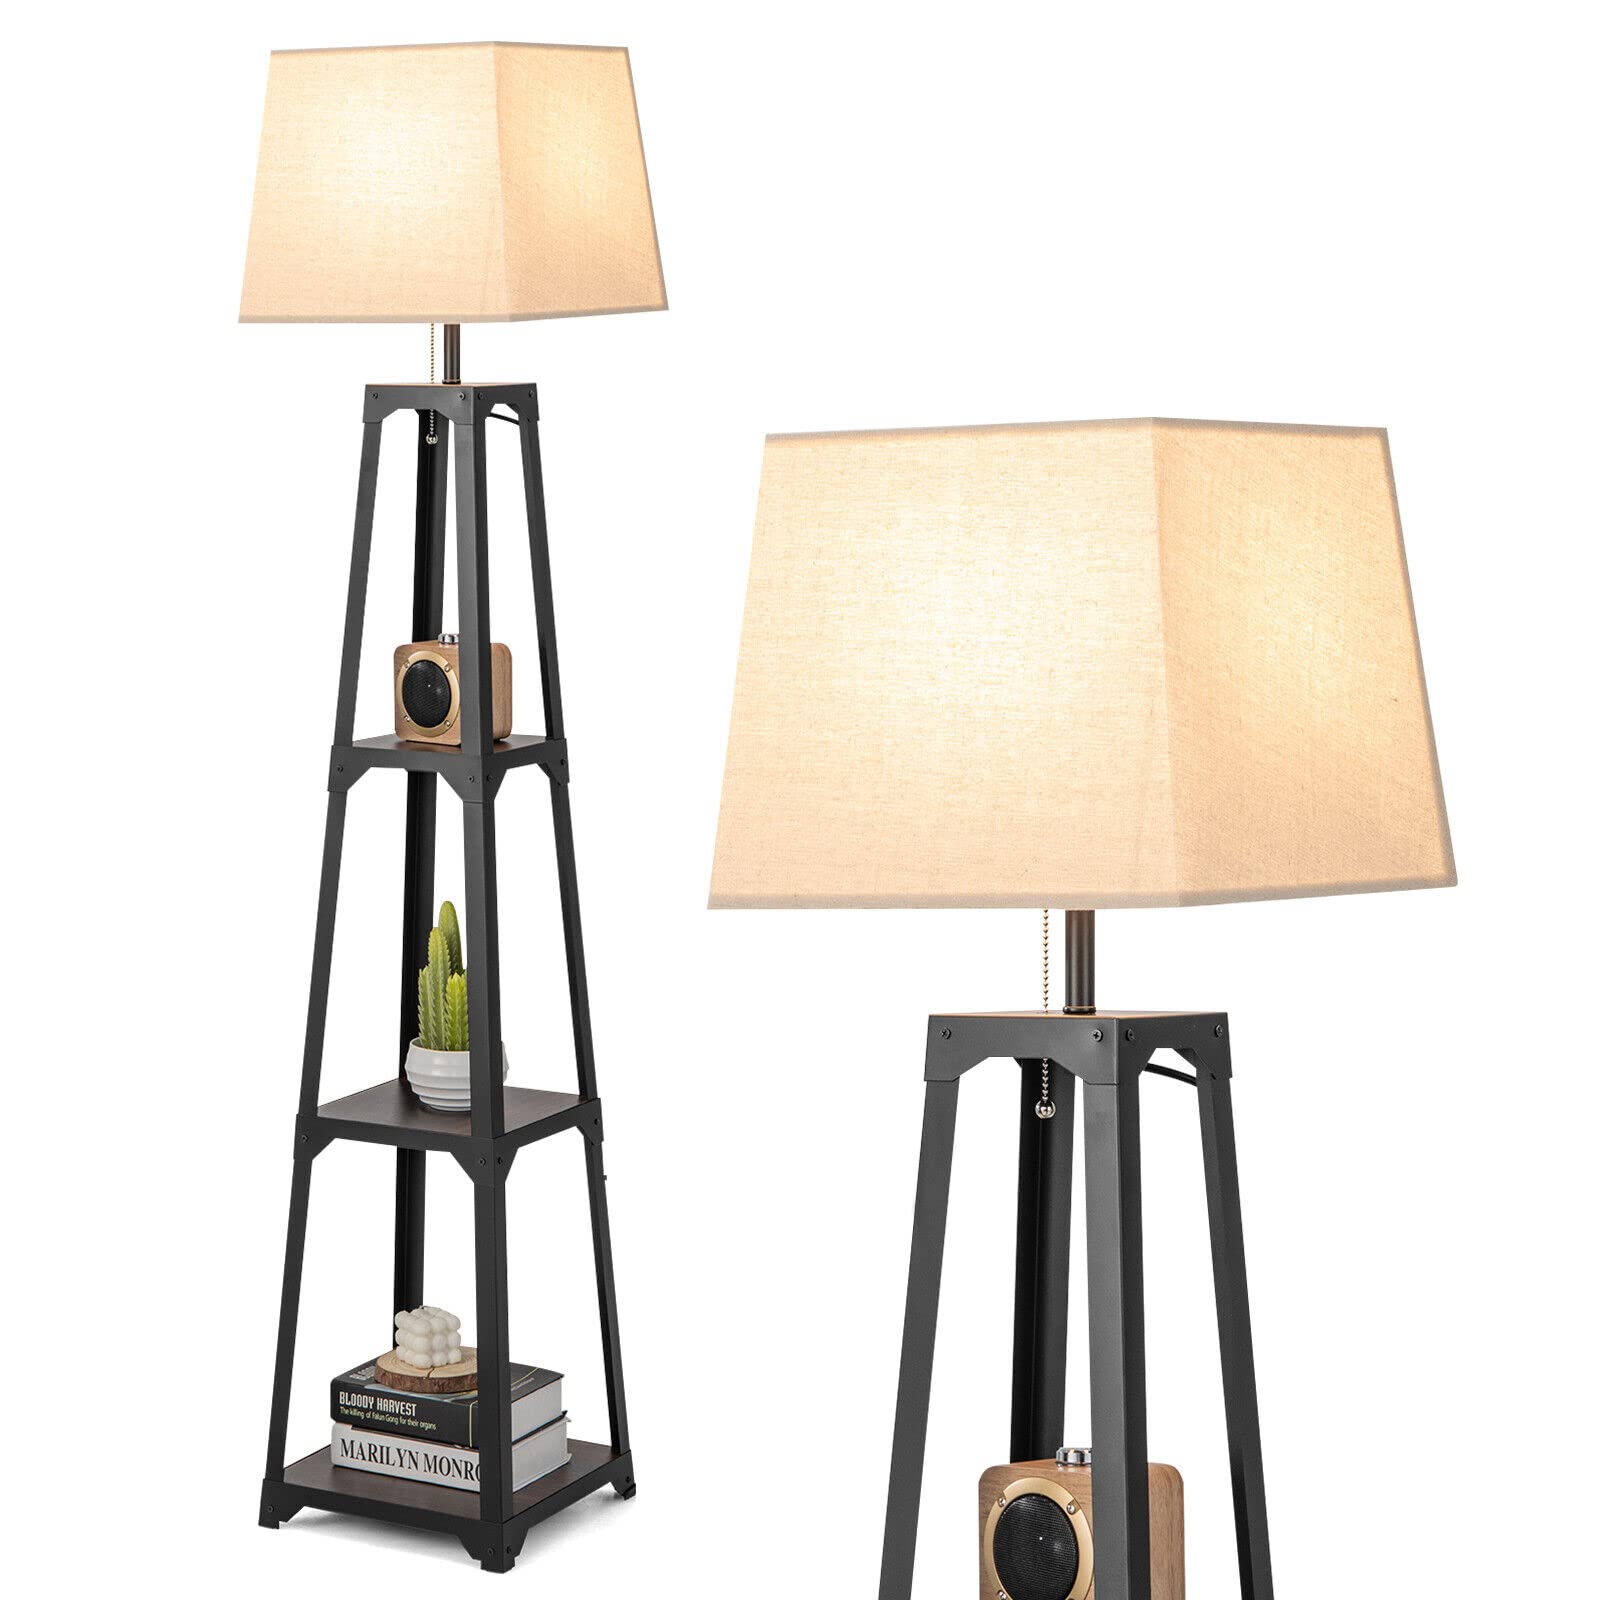 3 Tier Display Floor Lamp with Storage Shelves - Tangkula